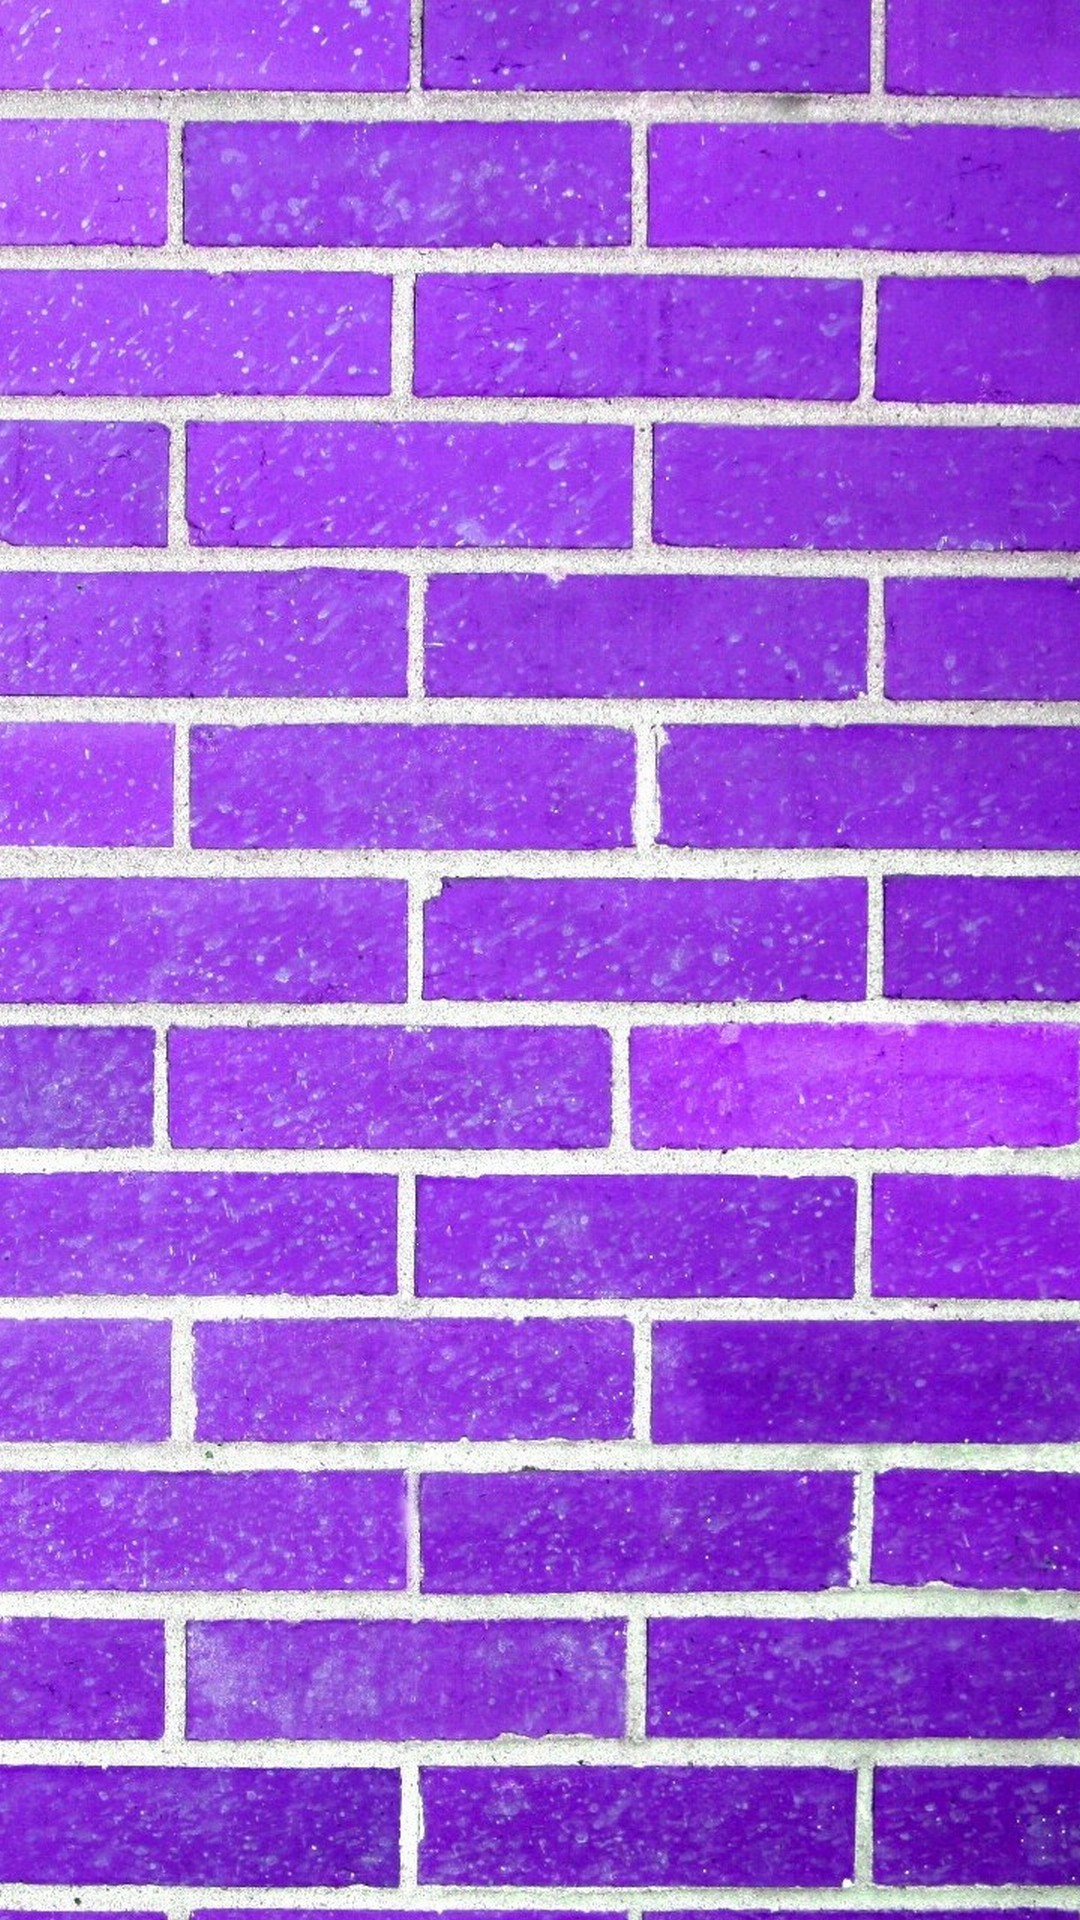 Purple Brick Wall Texture iPhone Wallpaper resolution 1080x1920